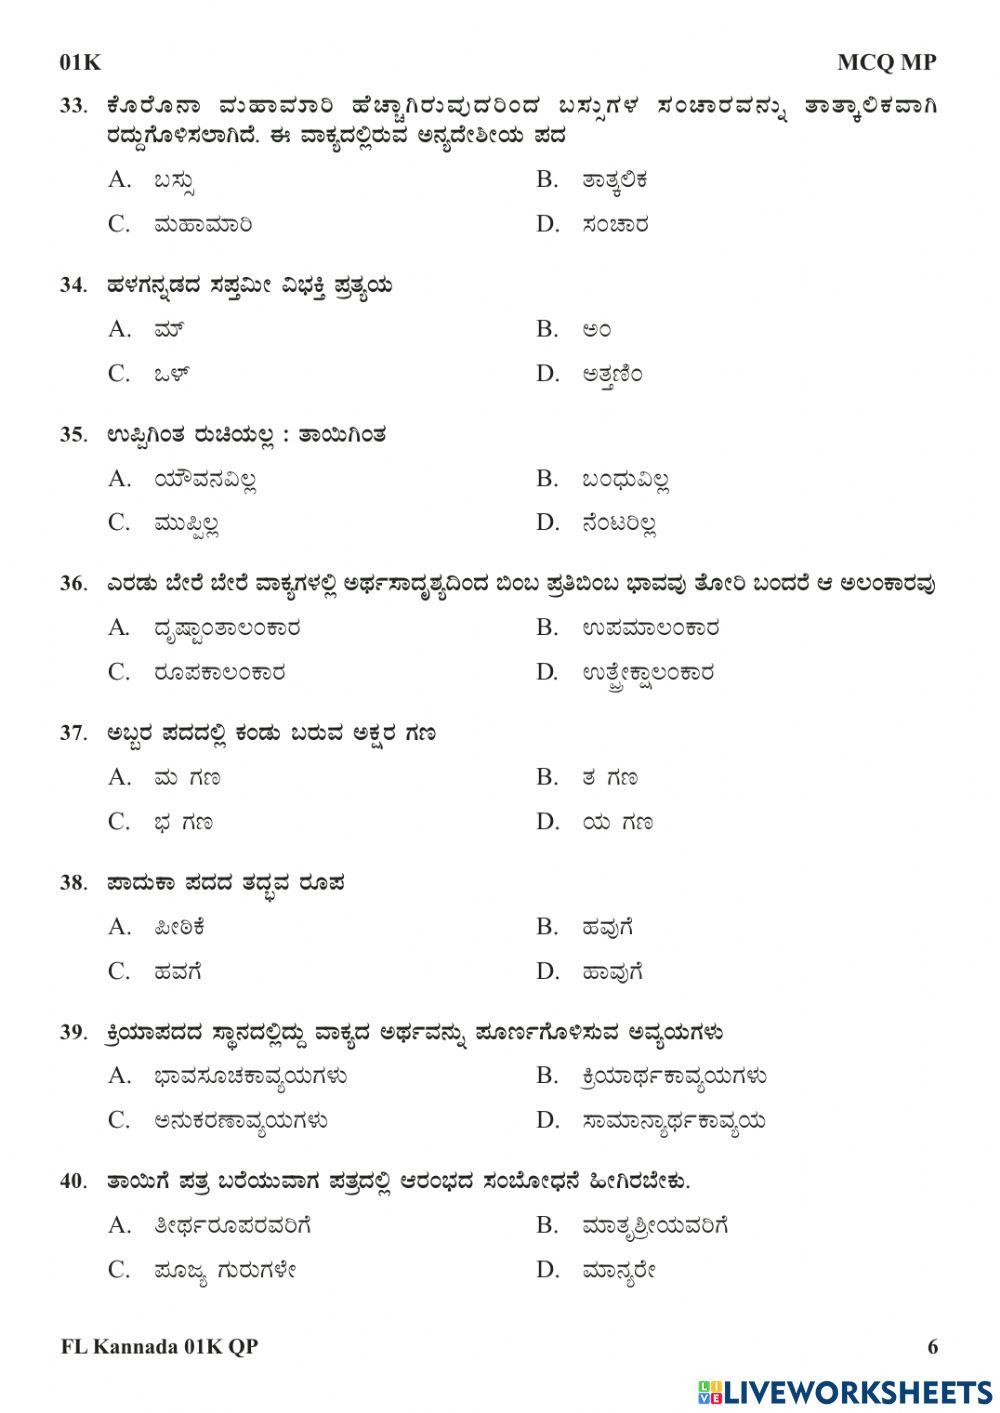 Kannada Test1